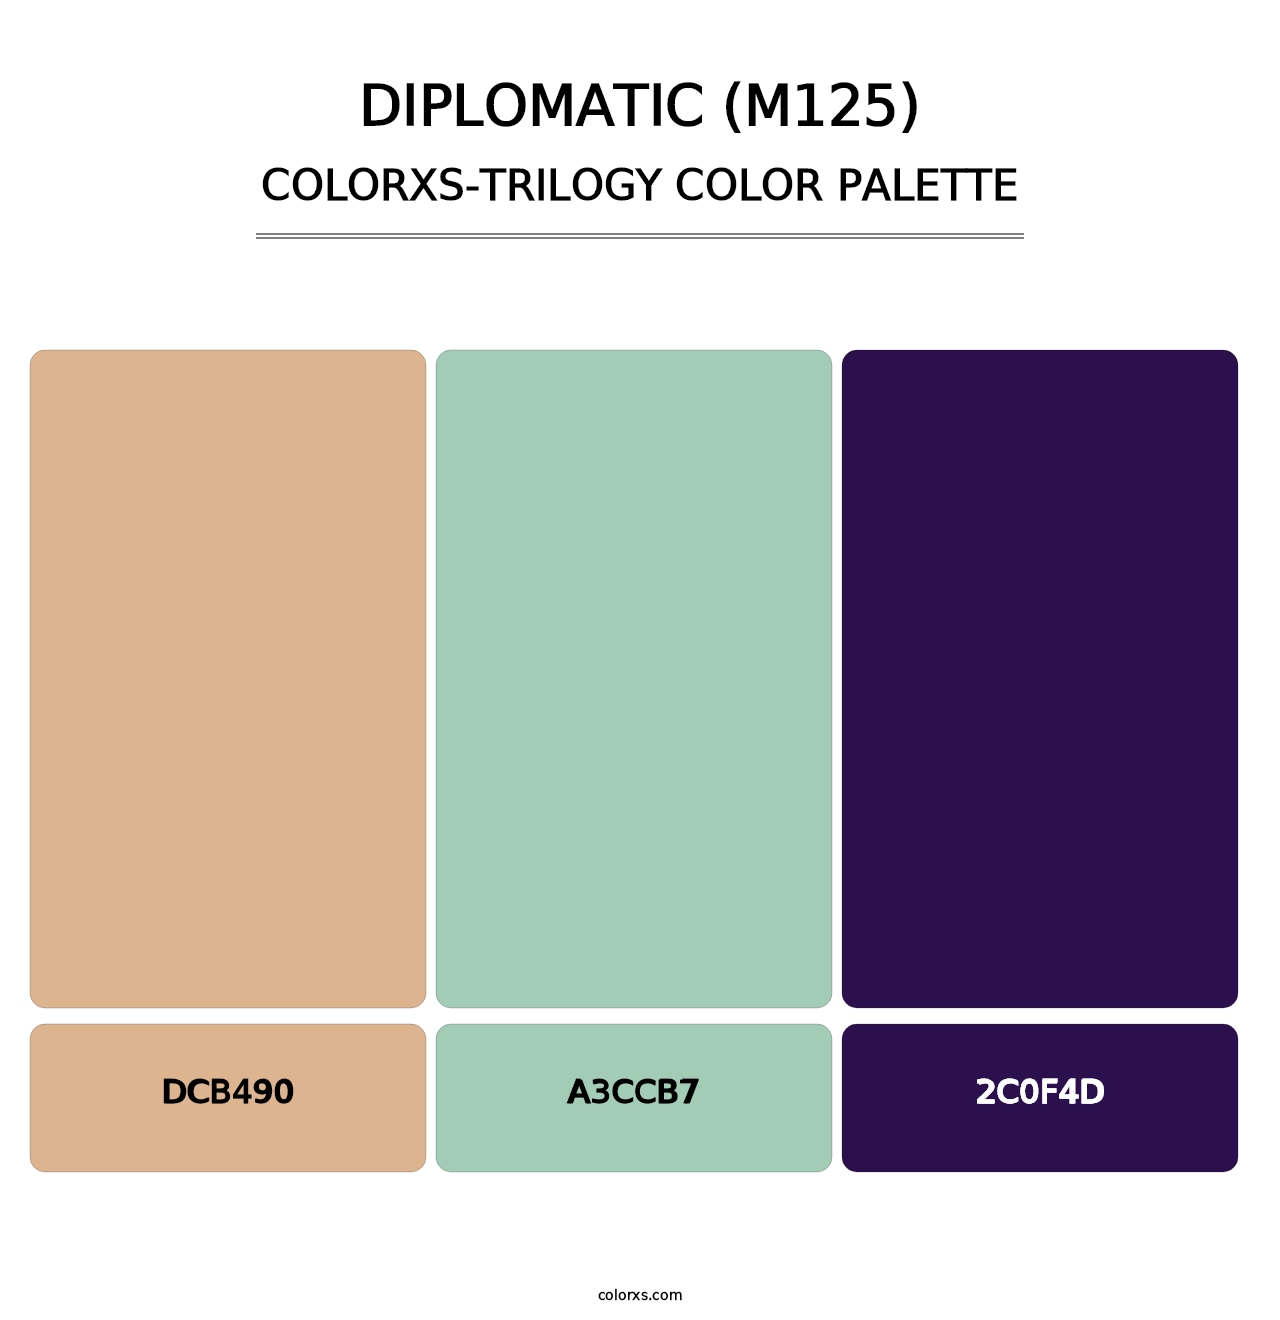 Diplomatic (M125) - Colorxs Trilogy Palette